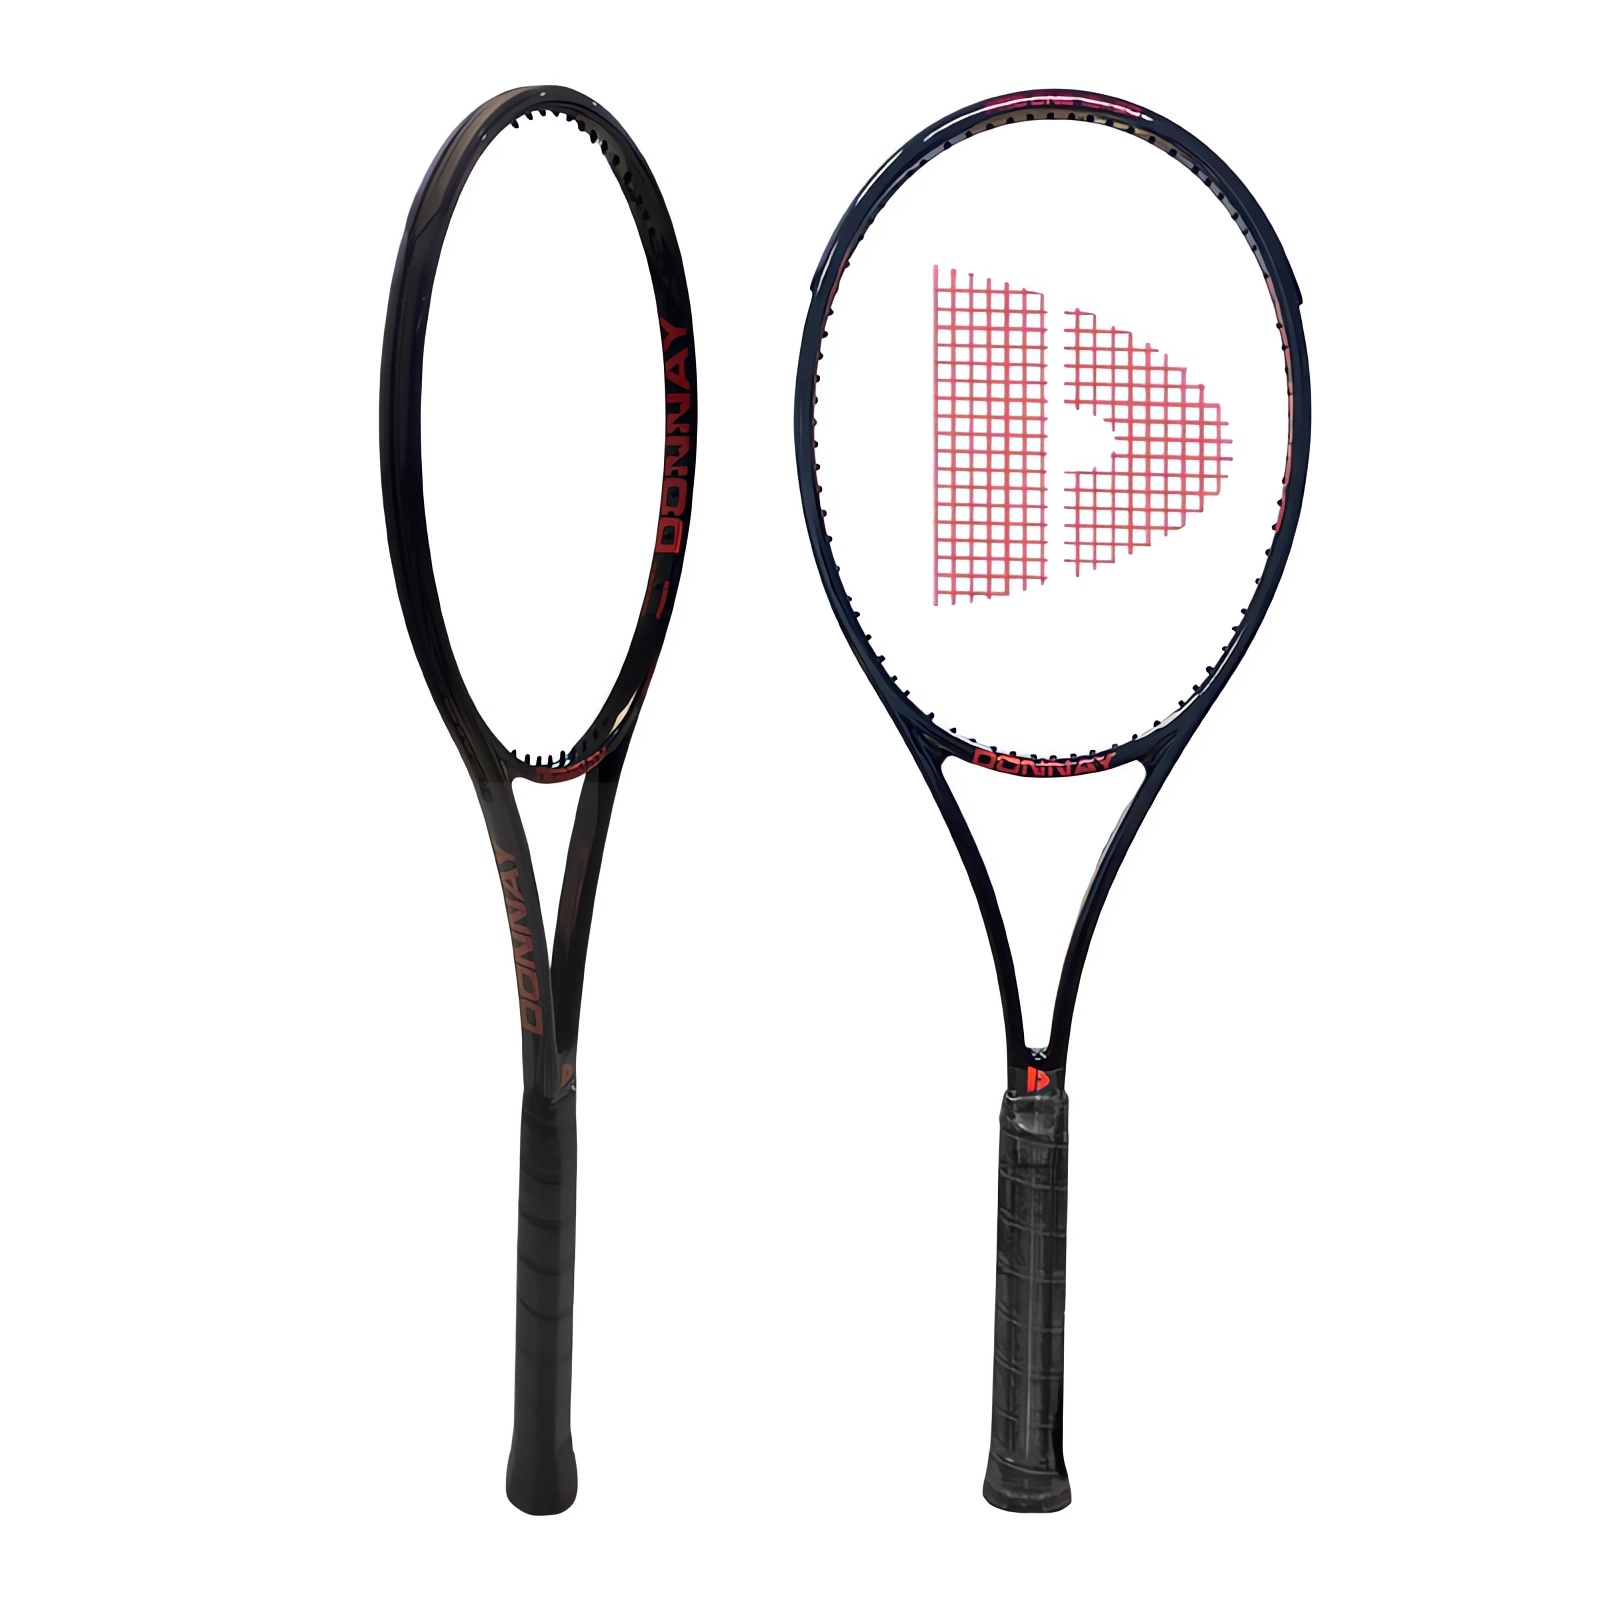 Donnay Pro One Penta 97 黑色限量款 专业网球拍